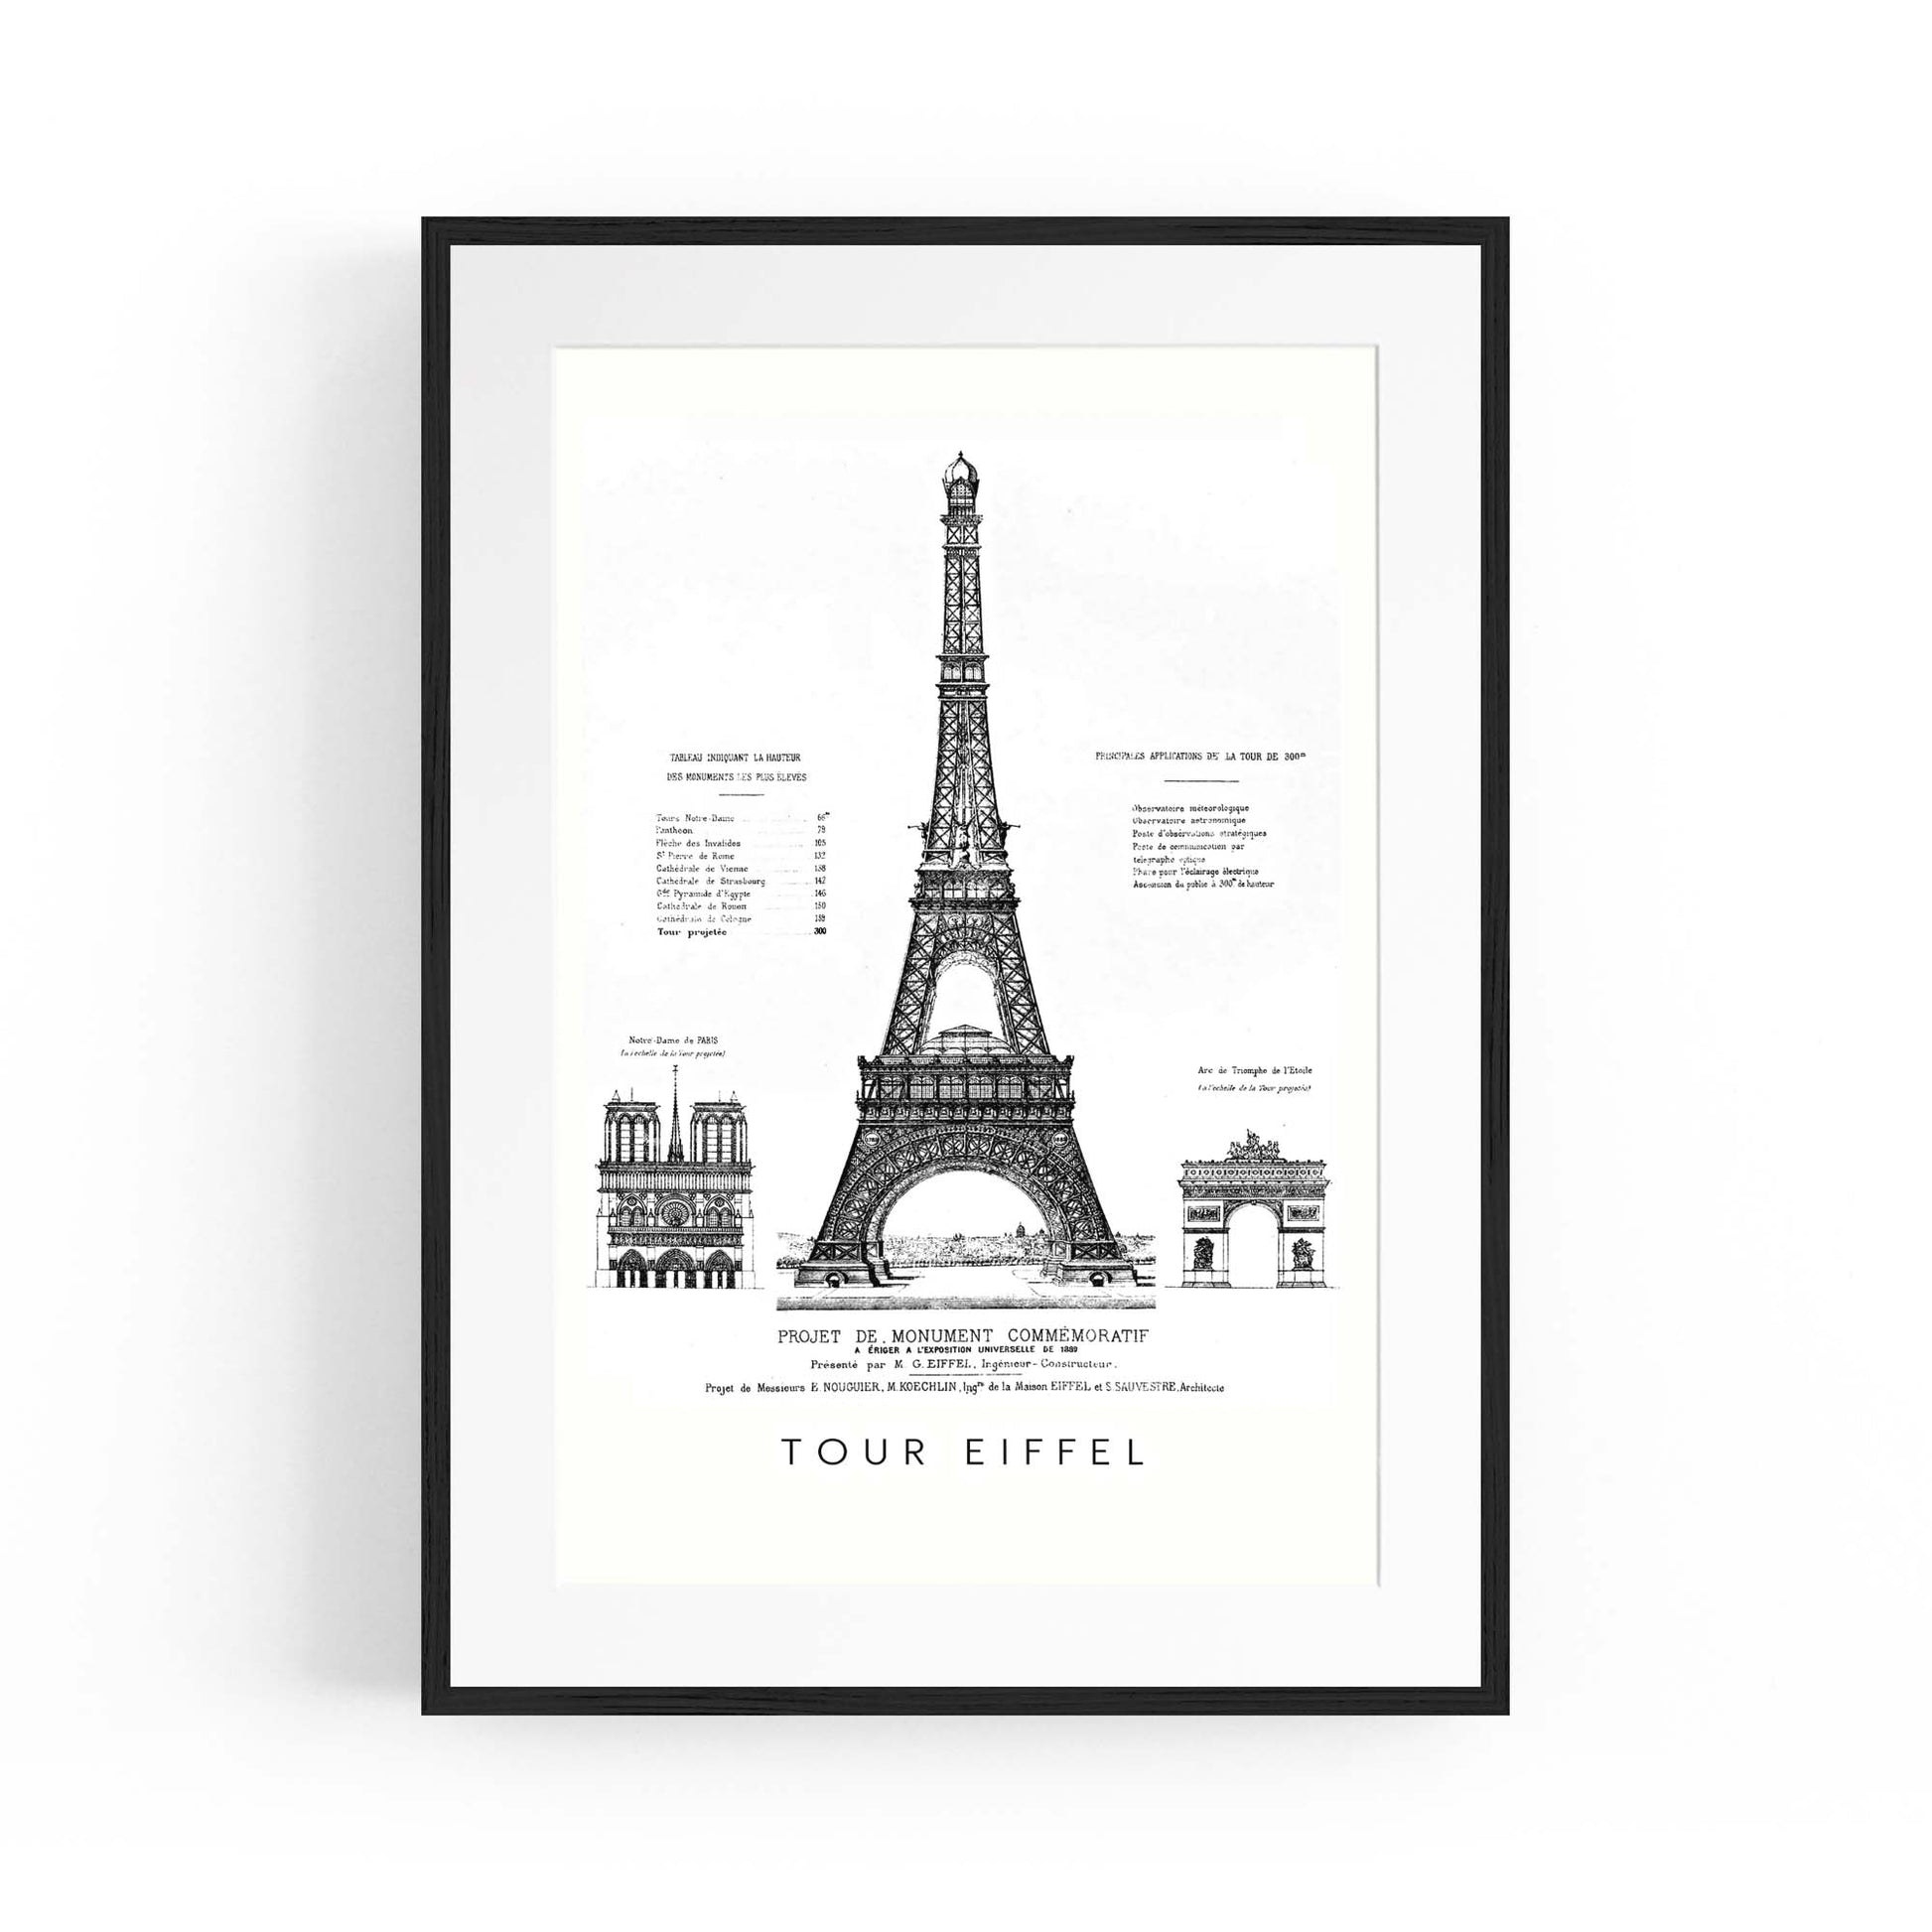 Eiffel Tower, Paris France Artwork Decor Wall Art #1 - The Affordable Art Company